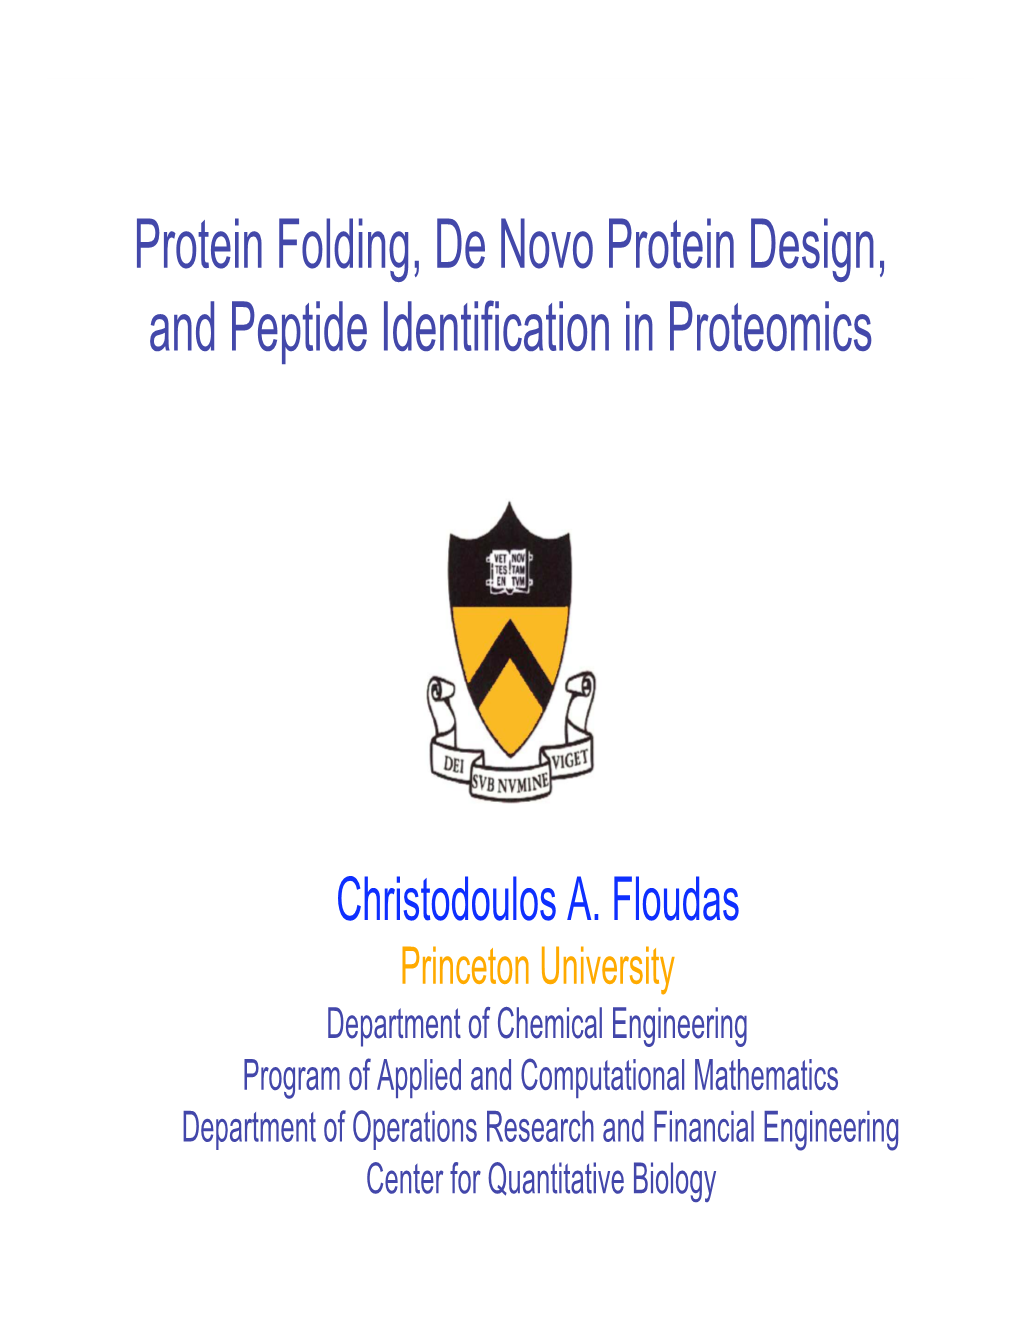 Protein Folding, De Novo Protein Design, and Peptide Identification in Proteomics